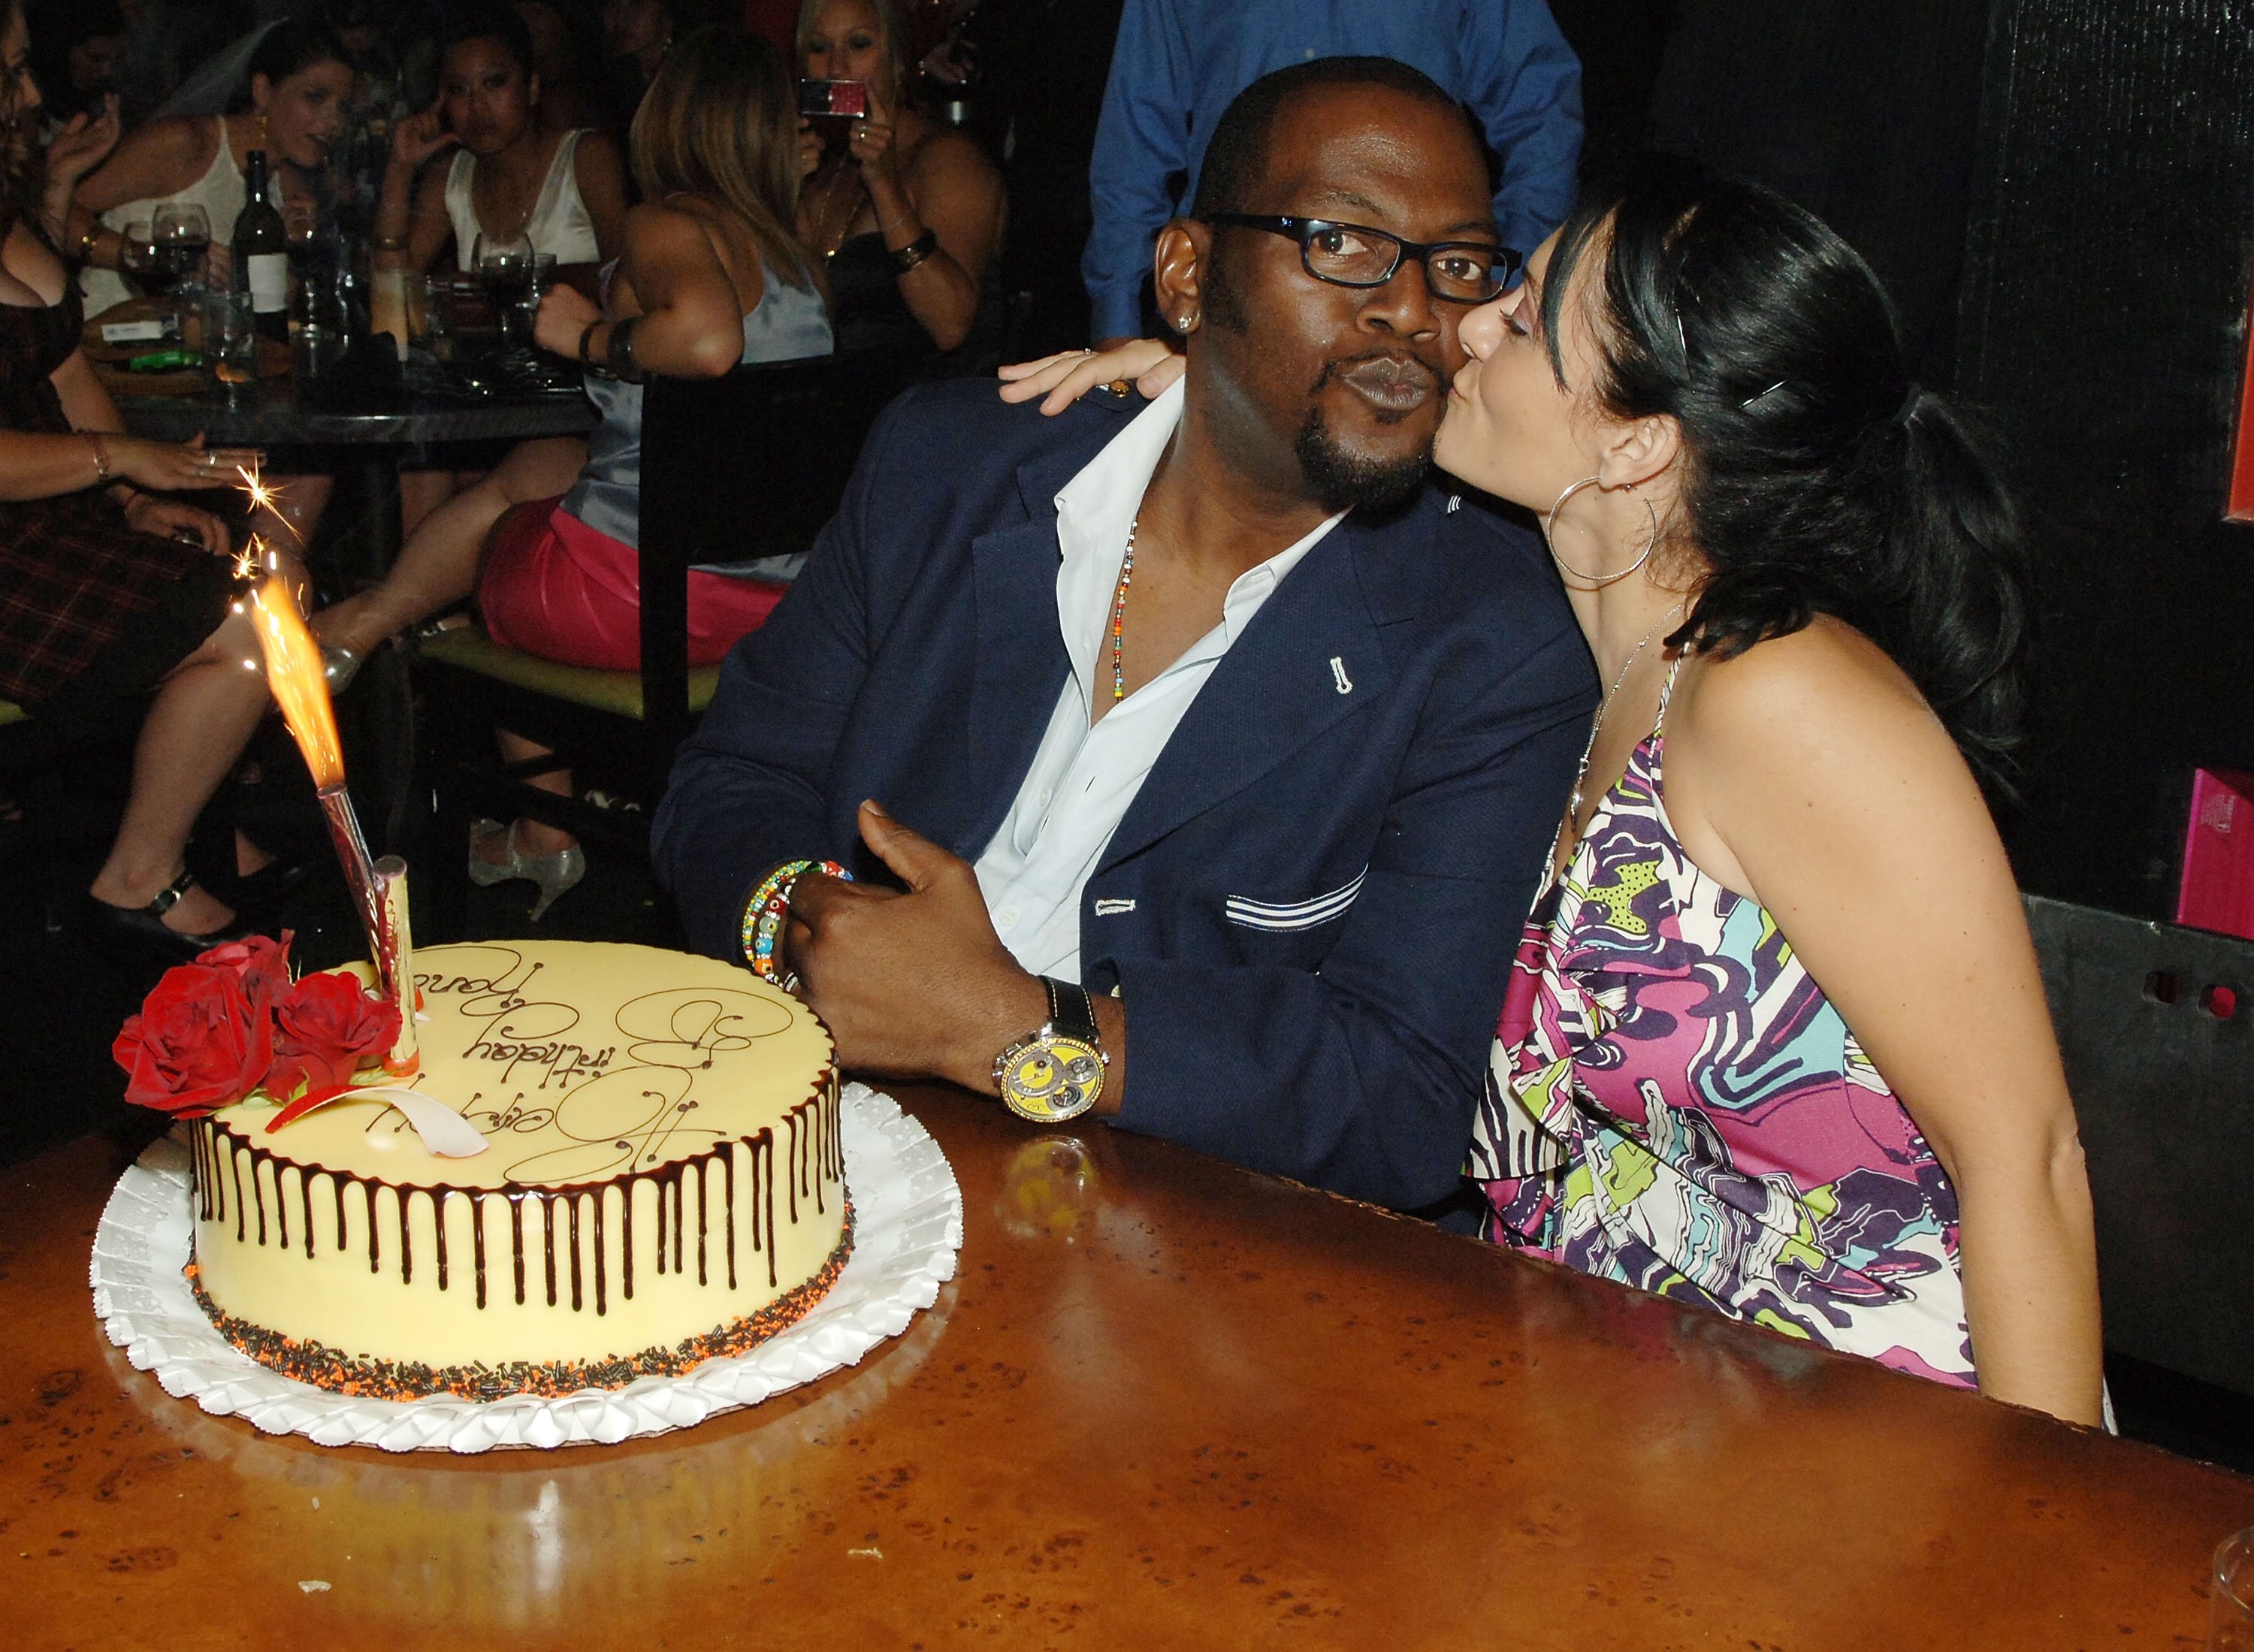 Randy Jackson and Erika Riker celebrating Randy's birthday at Tao Las Vegas on June 21, 2008 in Las Vegas. | Source: Getty Images